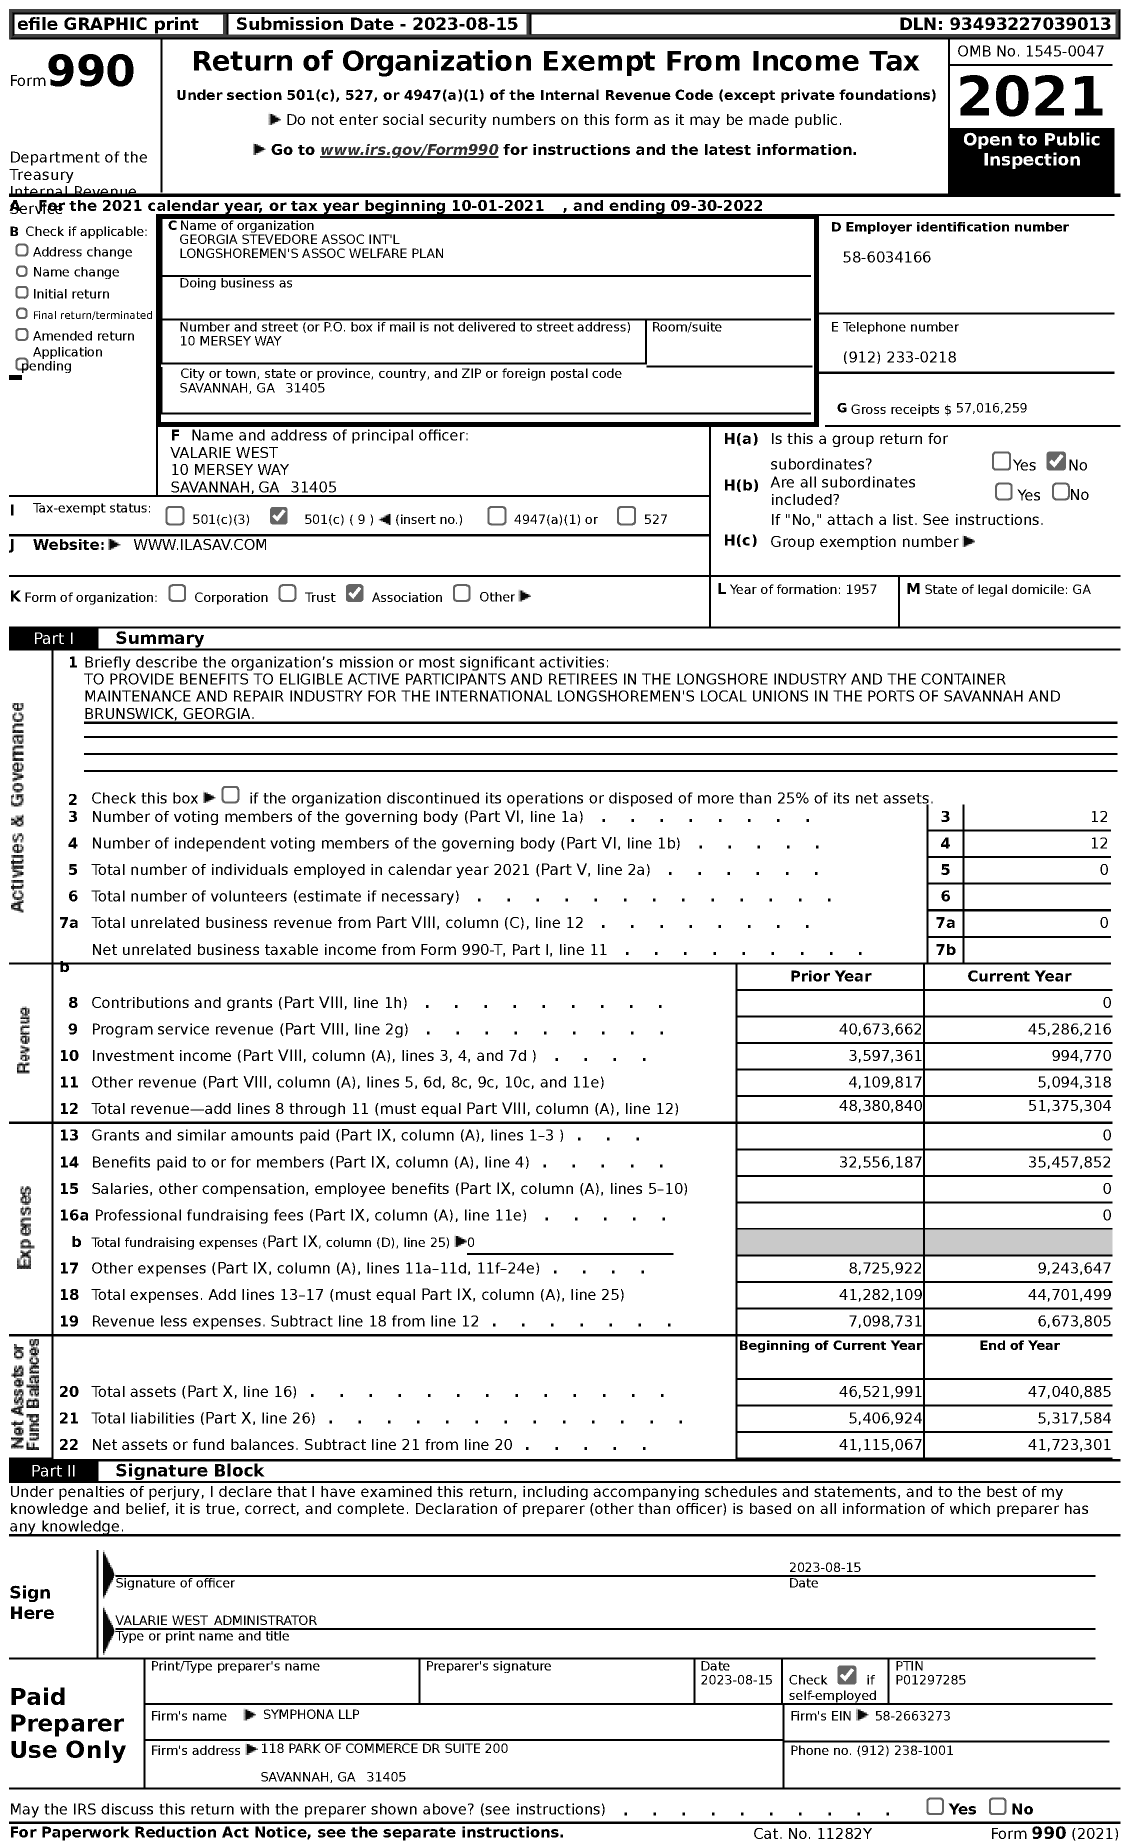 Image of first page of 2021 Form 990 for Georgia Stevedore Association International Longshoremen's Association Welfare Plan